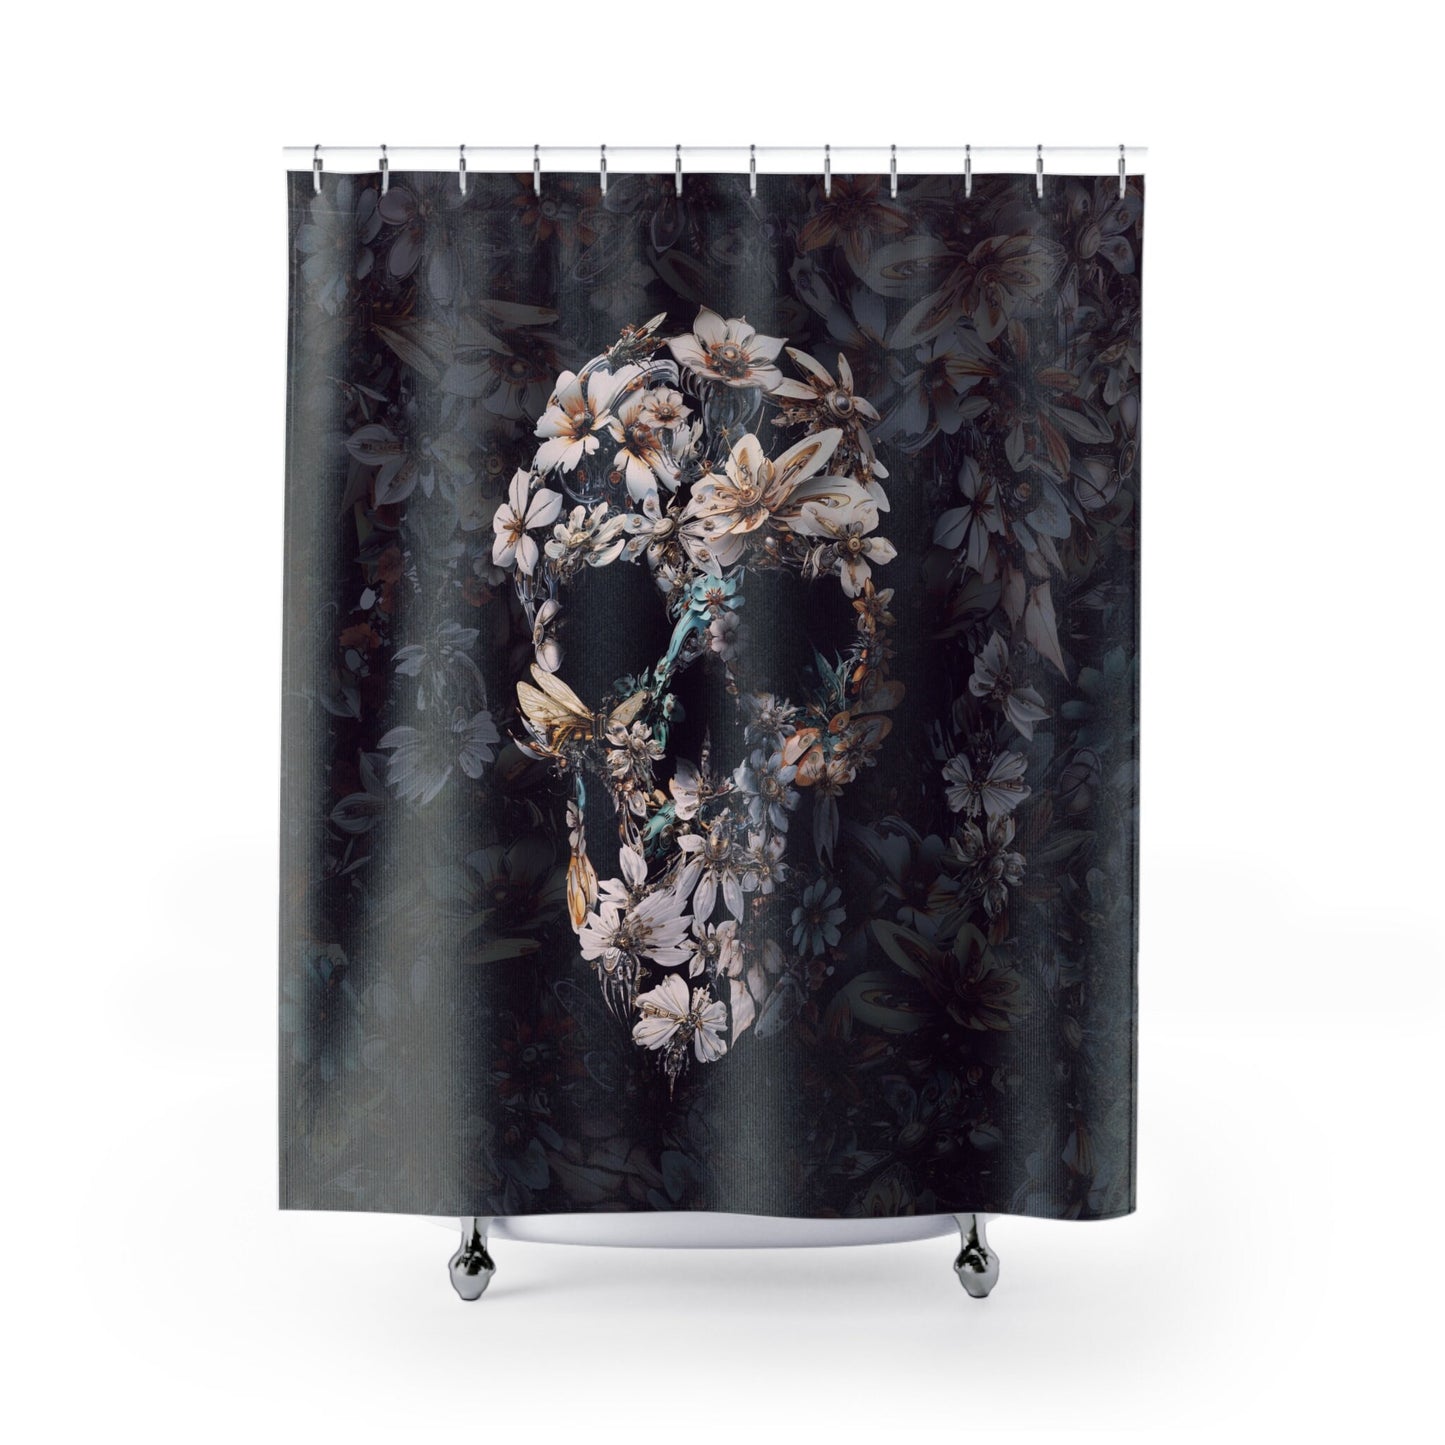 Floral Bloom Shower Curtain, Skull Shower Curtain Bathroom Decor, Modern Gothic Home Decor